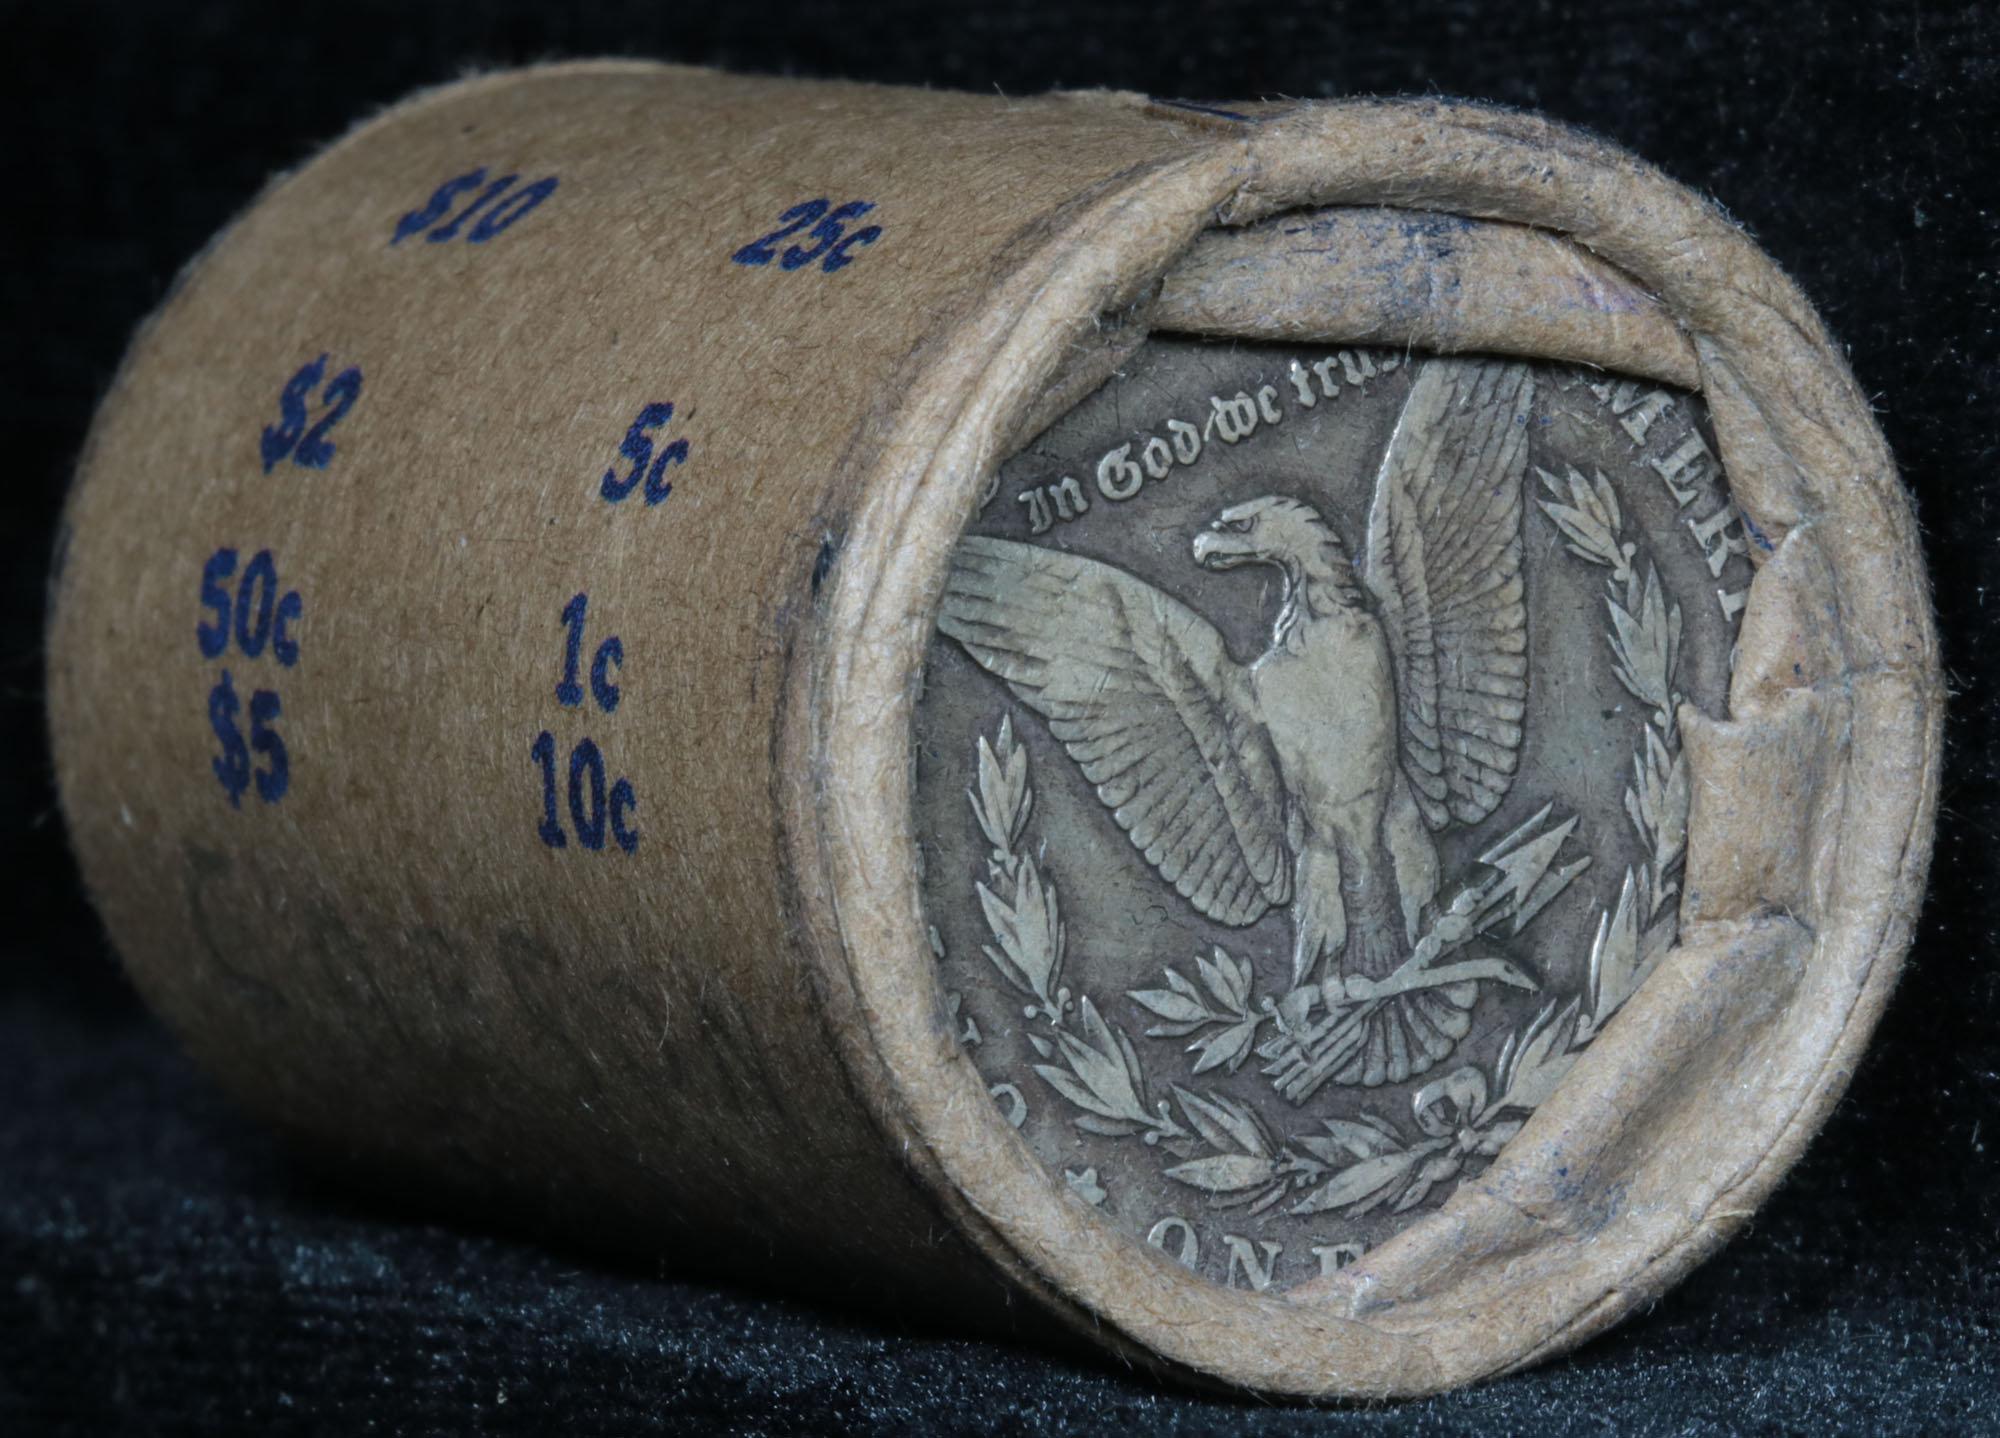 ***Auction Highlight*** All Carson City Morgan dollar roll ends 1893 & 'cc' (fc)